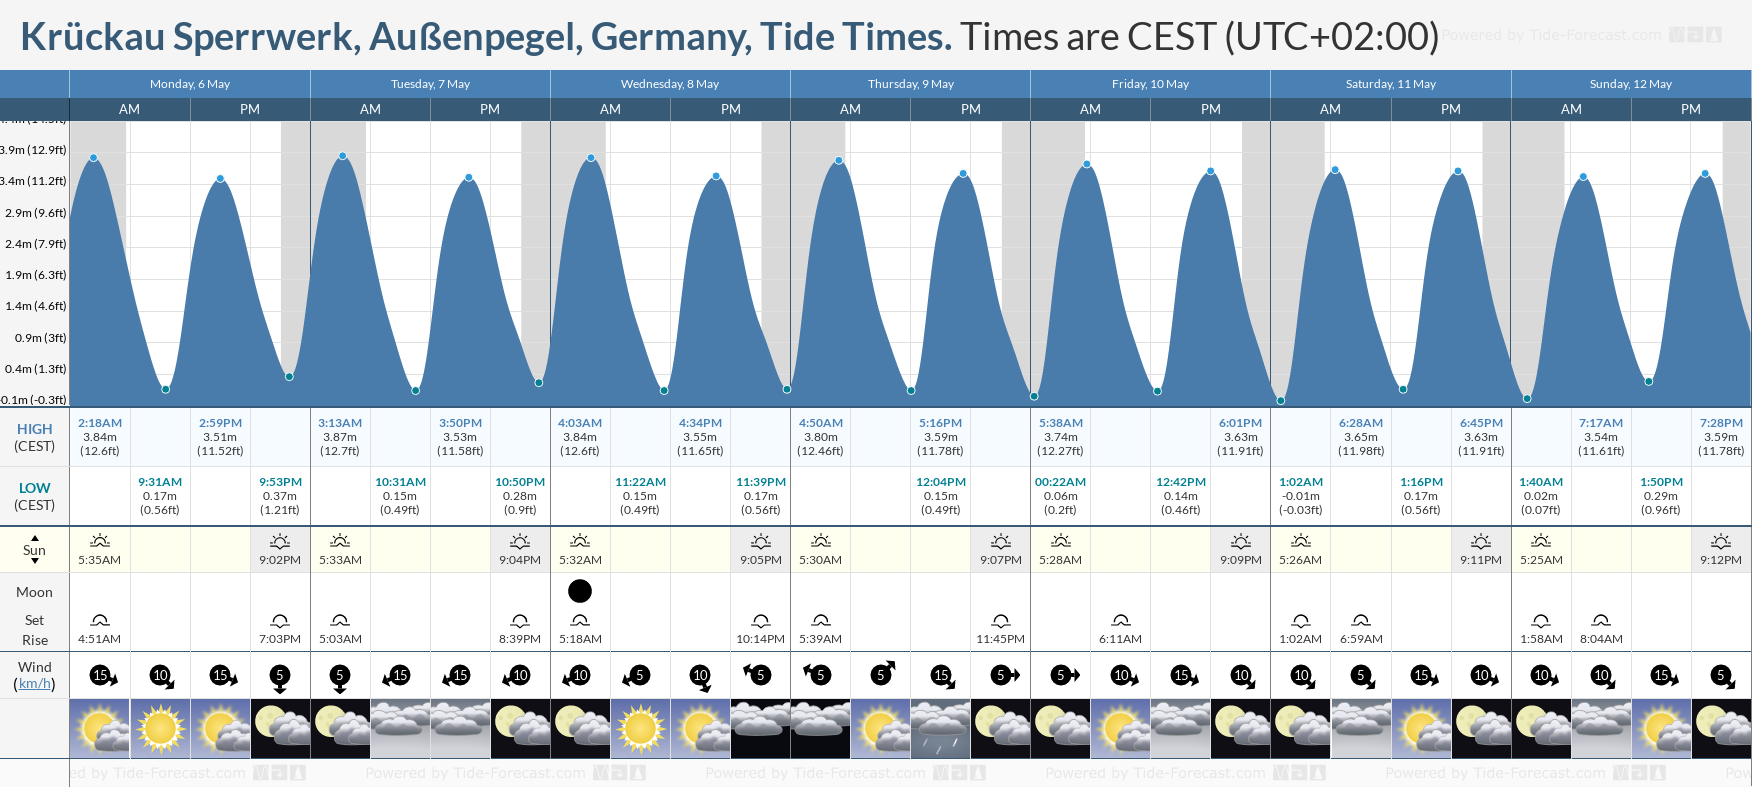 Krückau Sperrwerk, Außenpegel, Germany Tide Chart including high and low tide tide times for the next 7 days